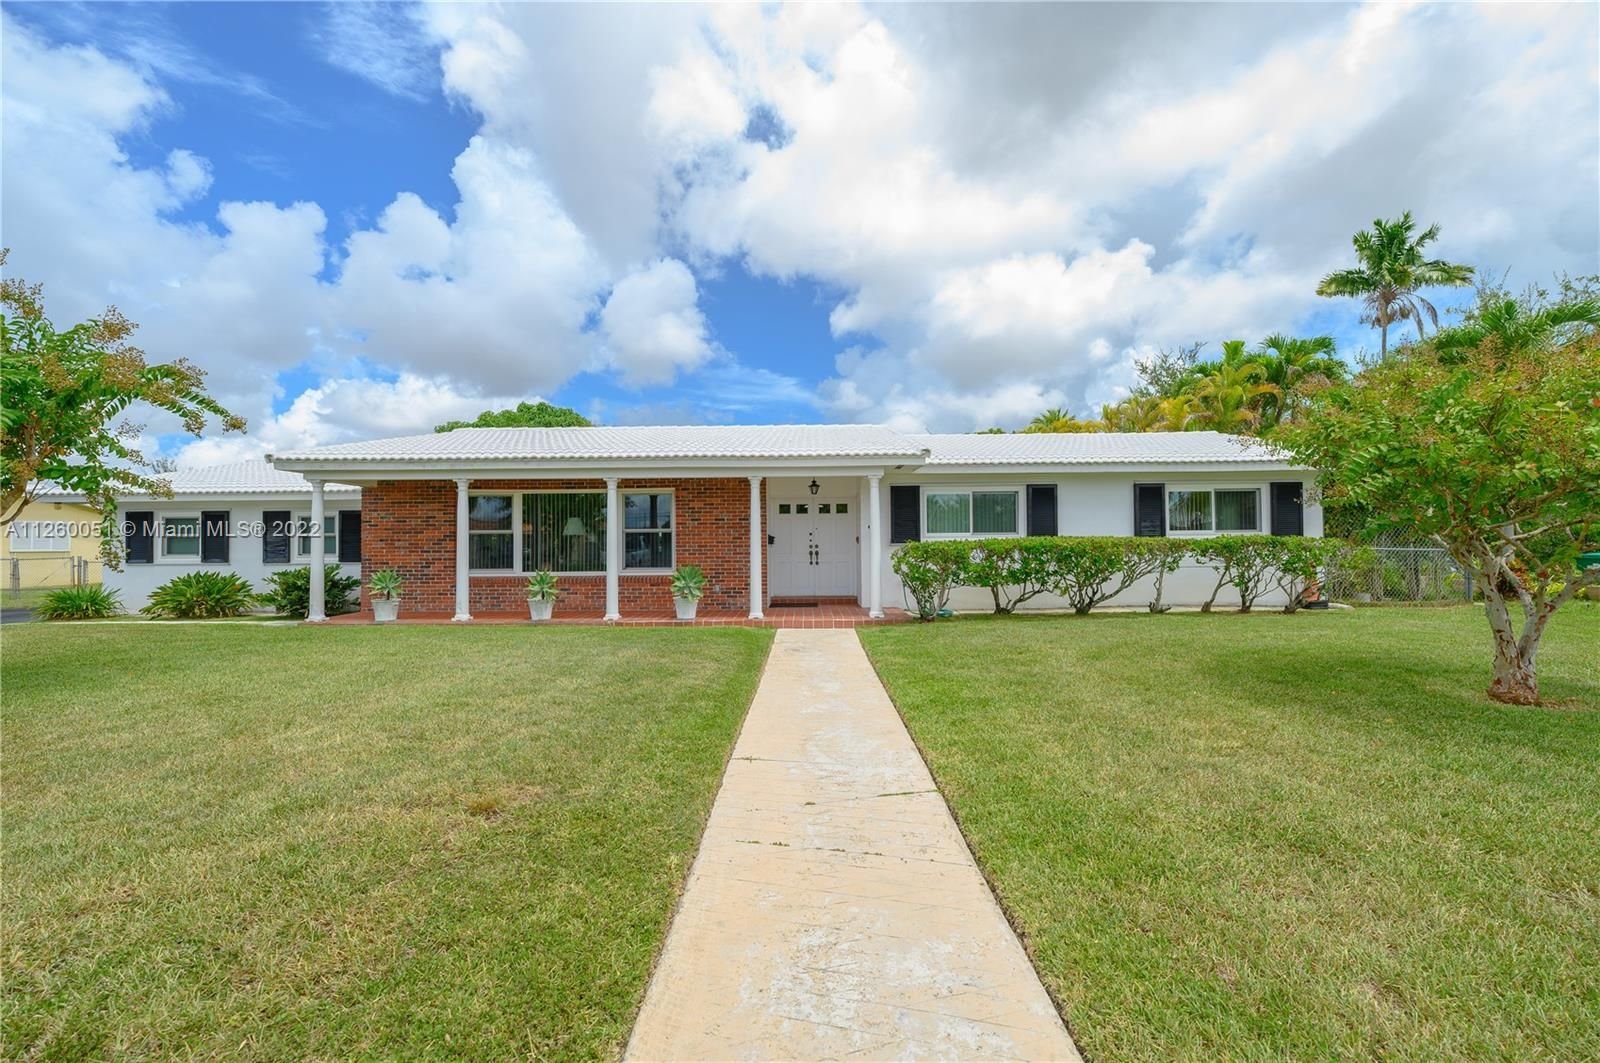 Real estate property located at 4575 89th Ave, Miami-Dade County, Miami, FL